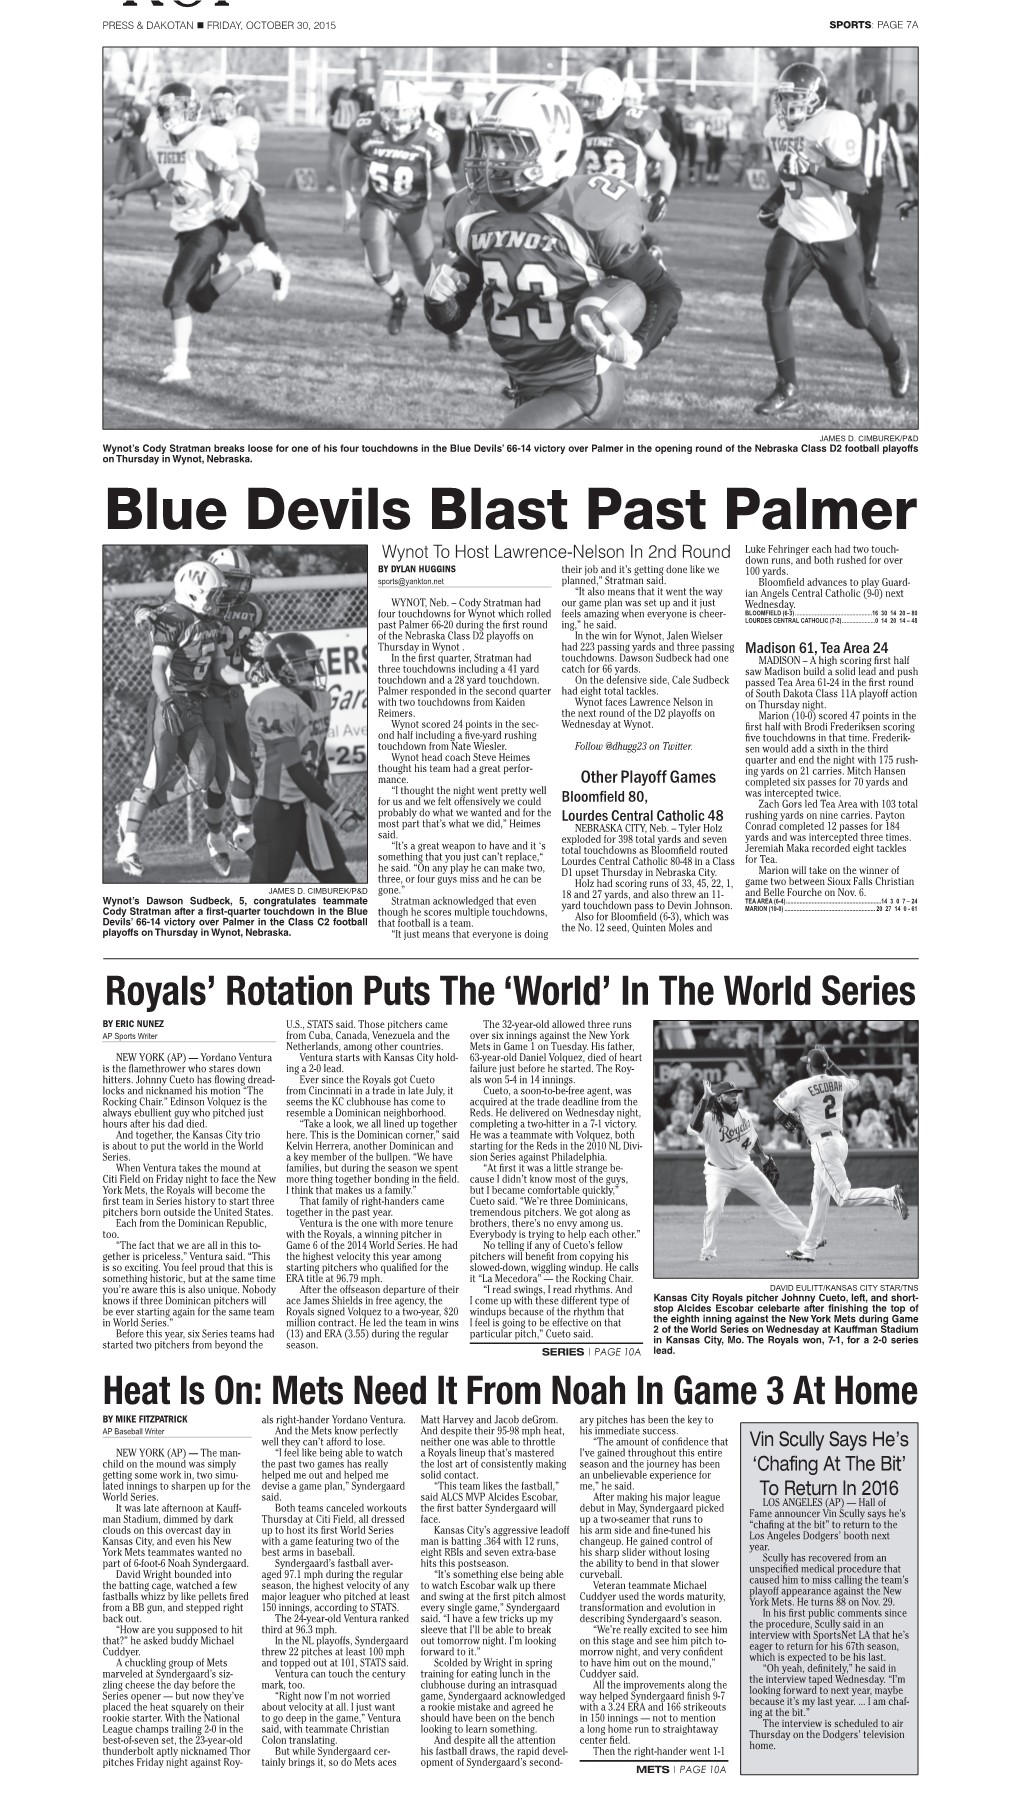 Blue Devils Blast Past Palmer